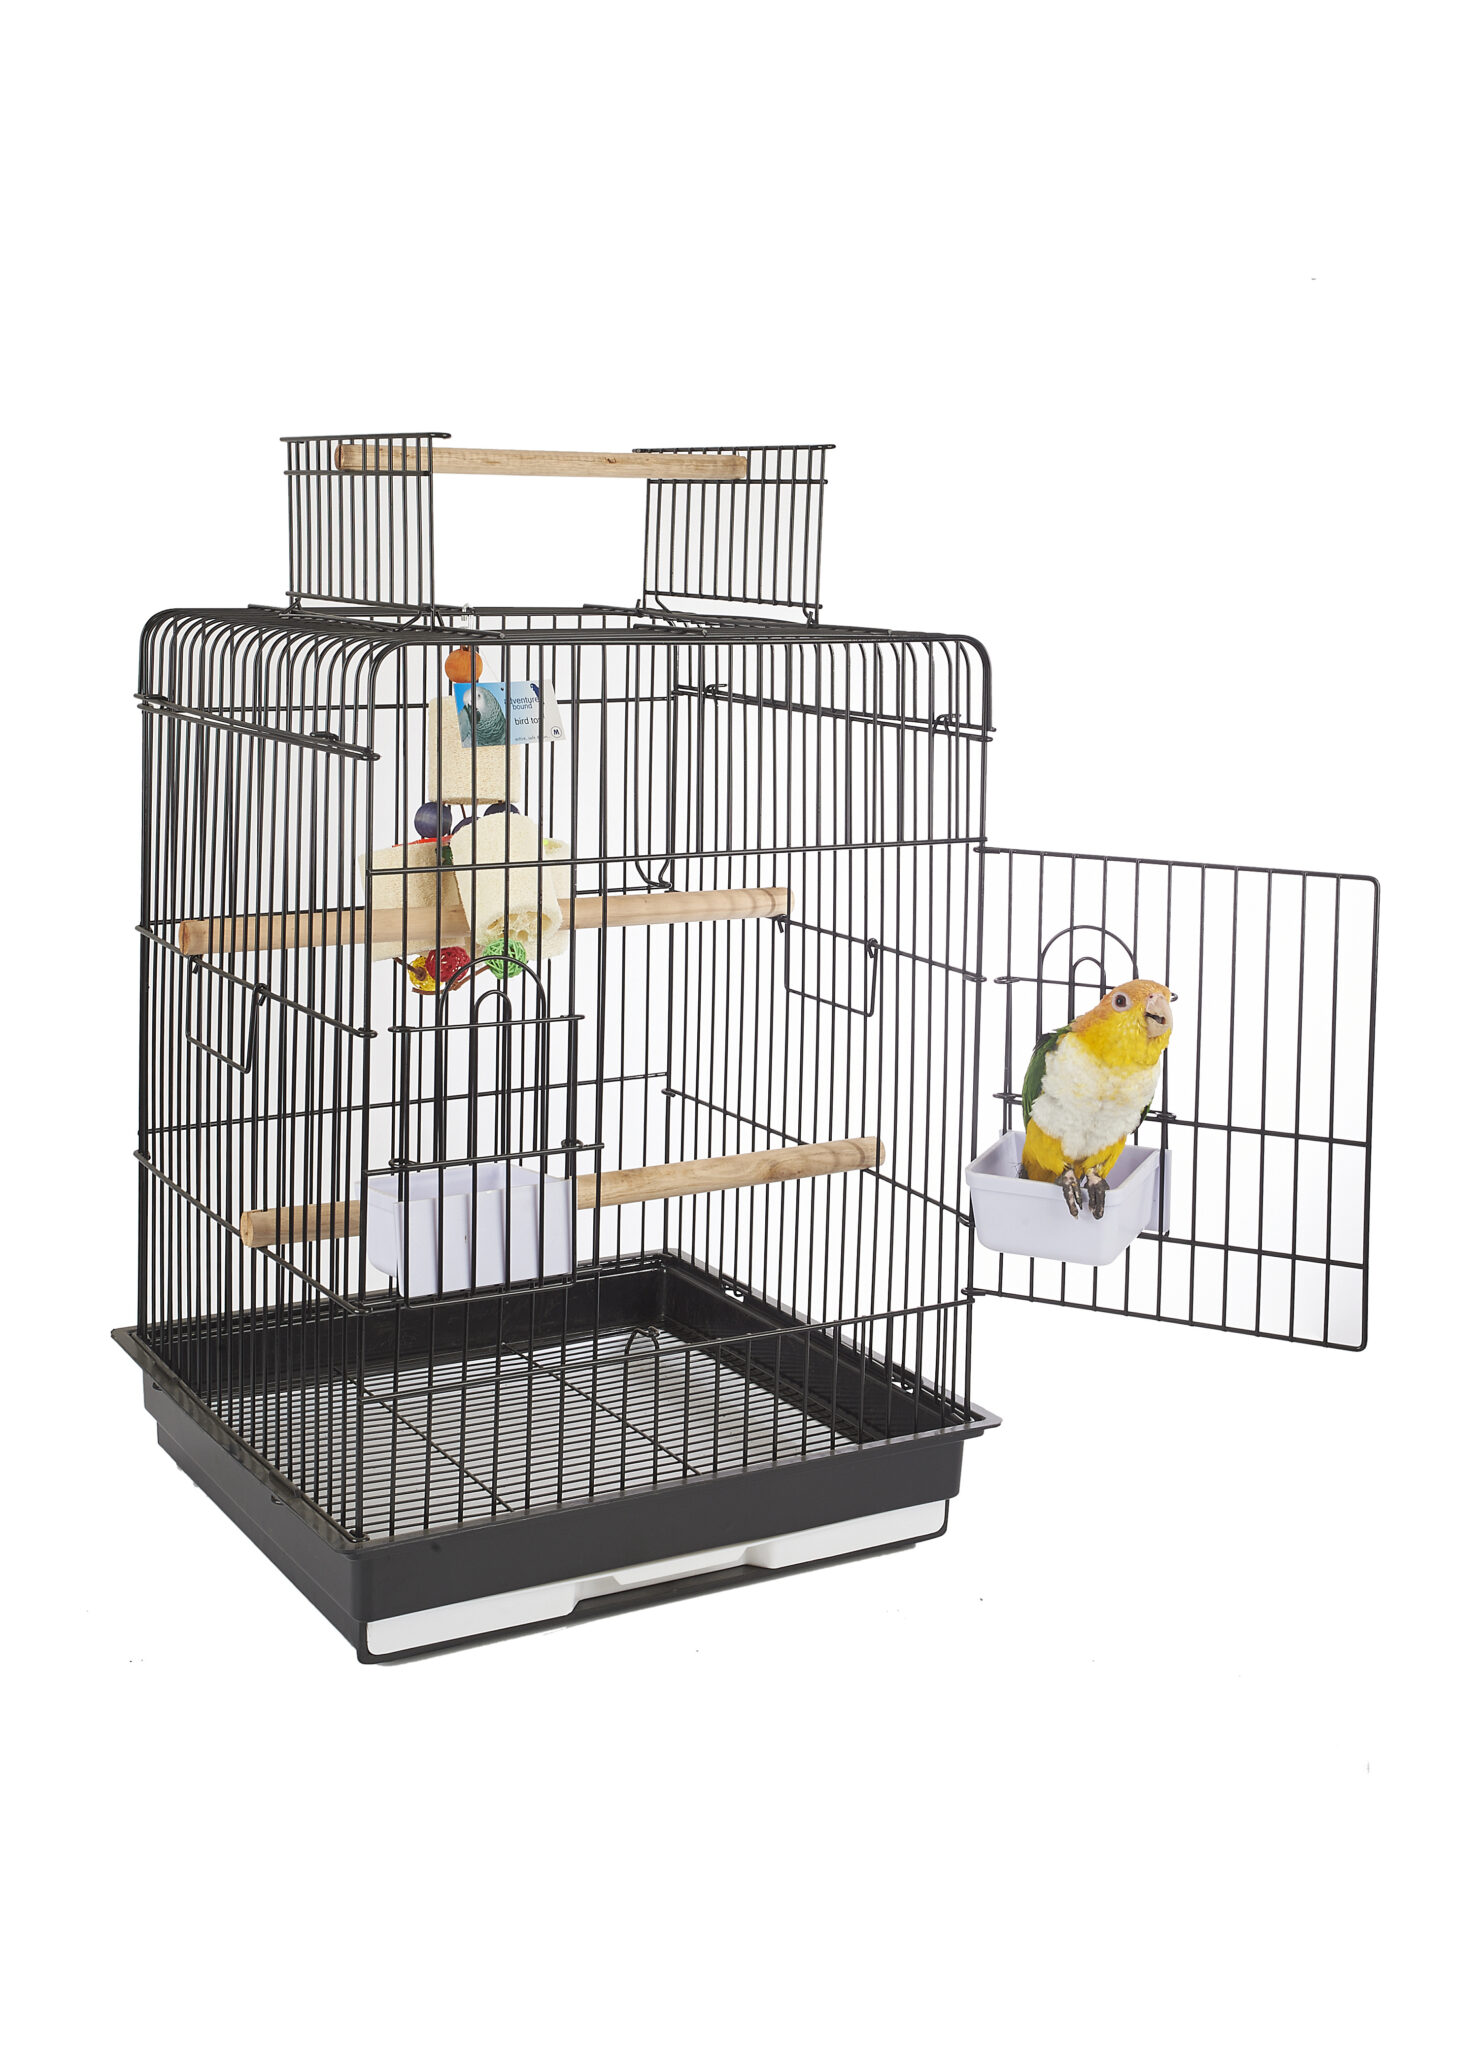 ringneck parrot cage for sale